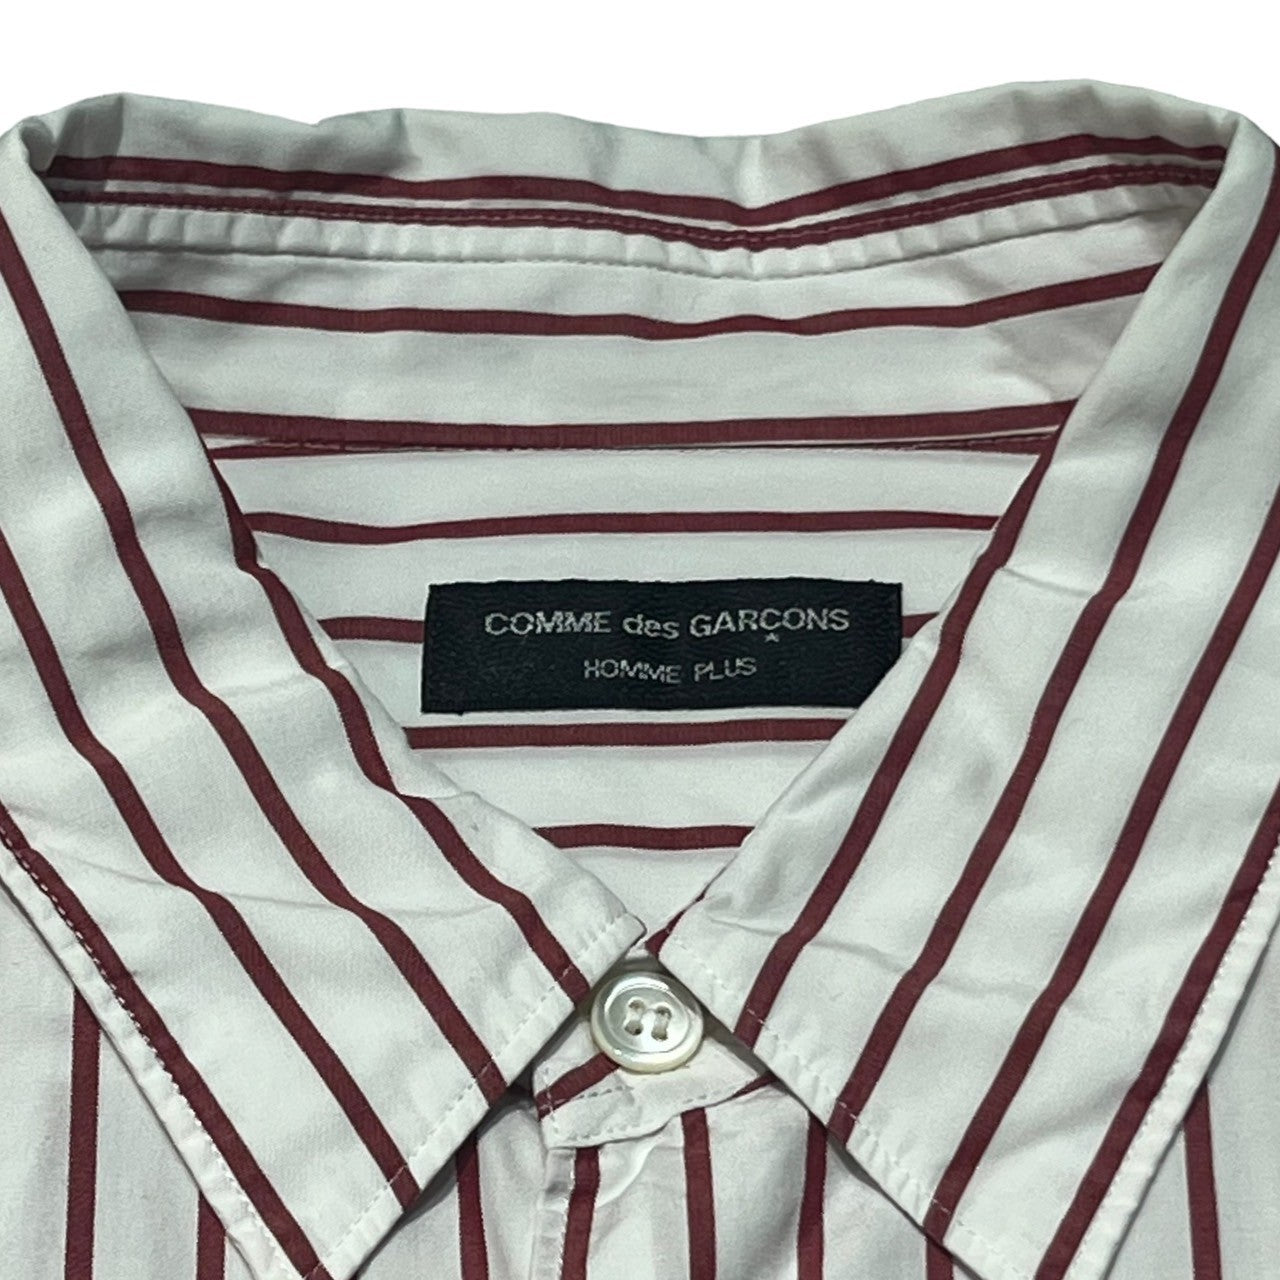 COMME des GARCONS HOMME PLUS(コムデギャルソンオムプリュス) 03SS circlr logo print shirt/サークルロゴプリントシャツ PI-B054 SIZE表記なし(FREE) ホワイト×ピンク AD2002 daytime evening期（デイタイムイブニング期）